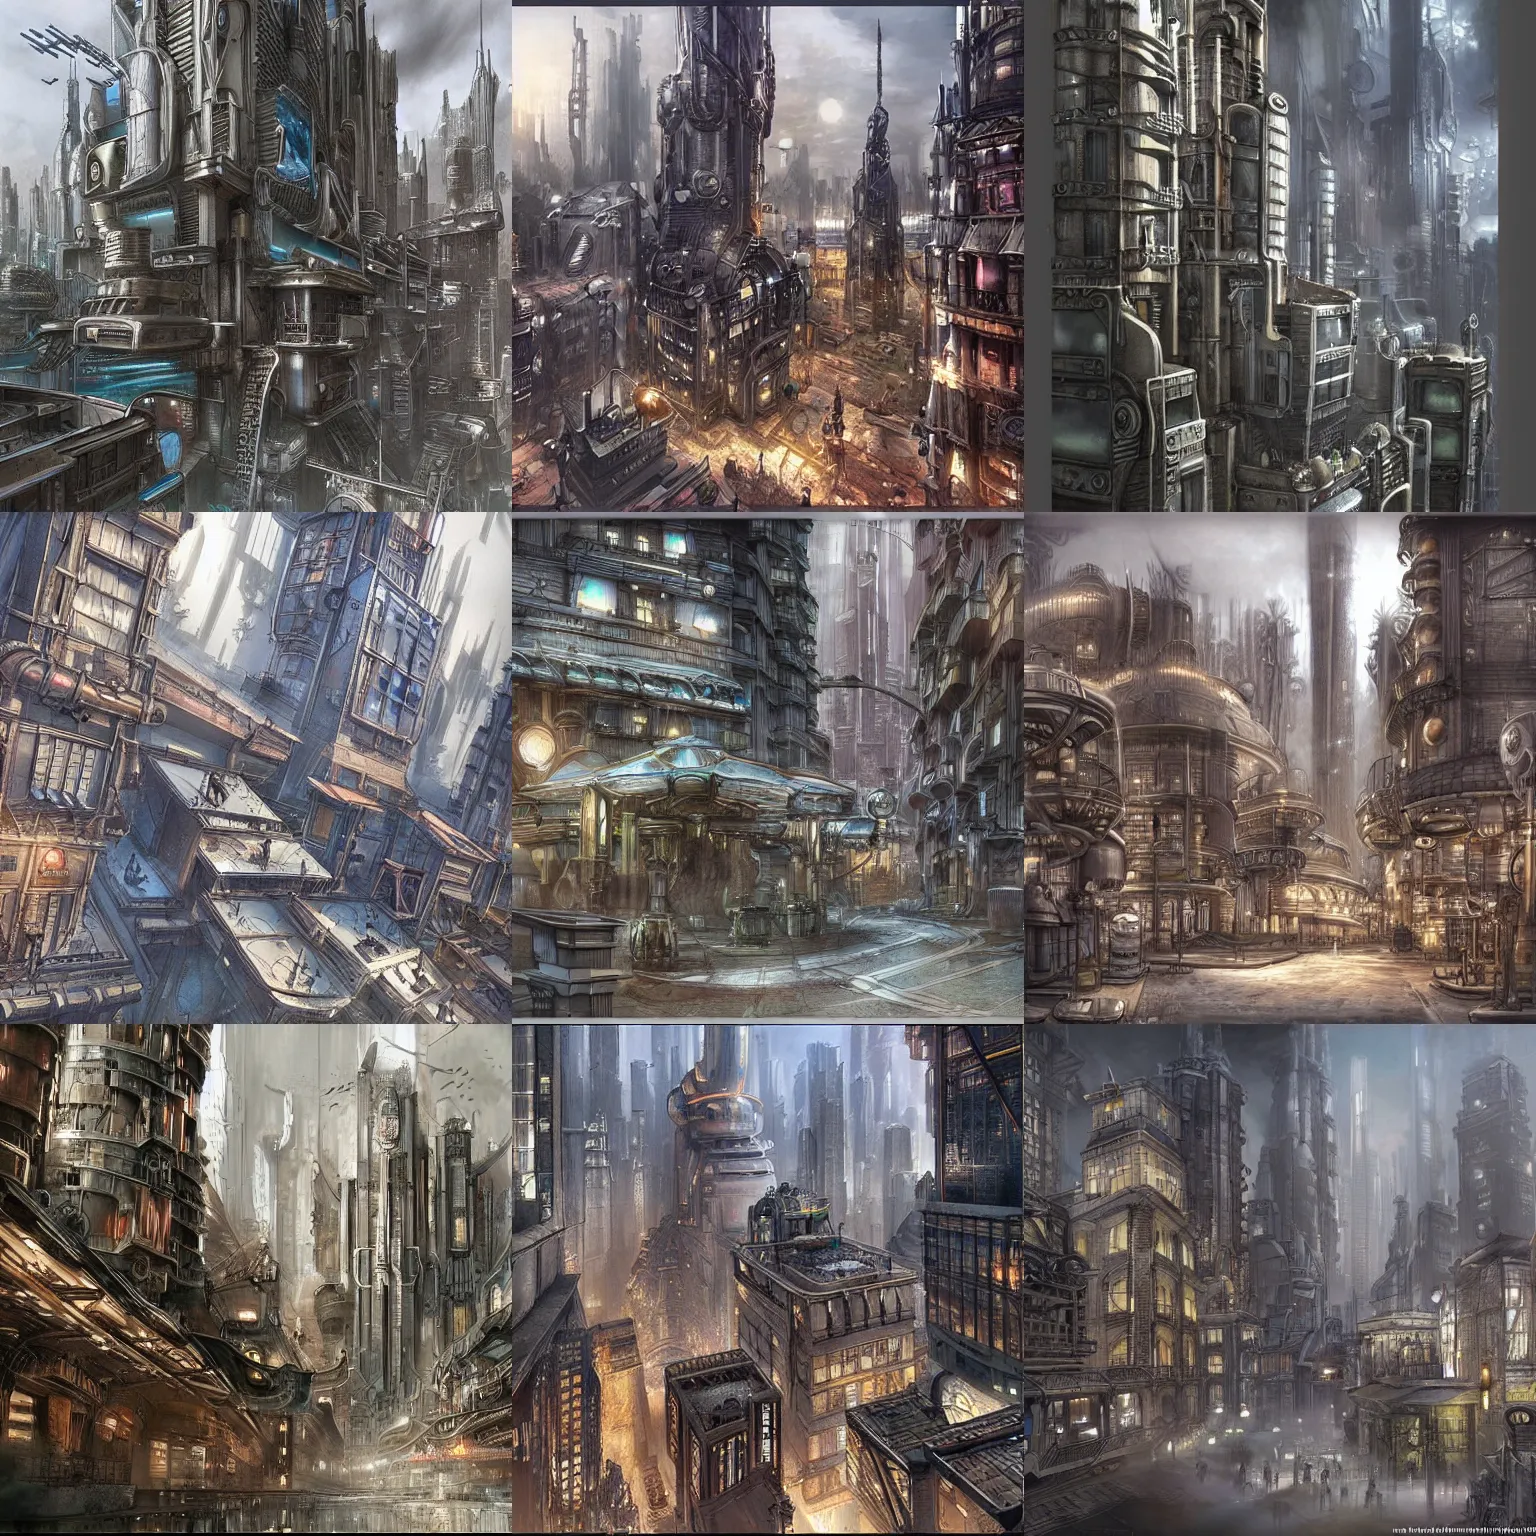 Prompt: ultra realistic architectural drawings of sci-fi steampunk cityscape, distopian